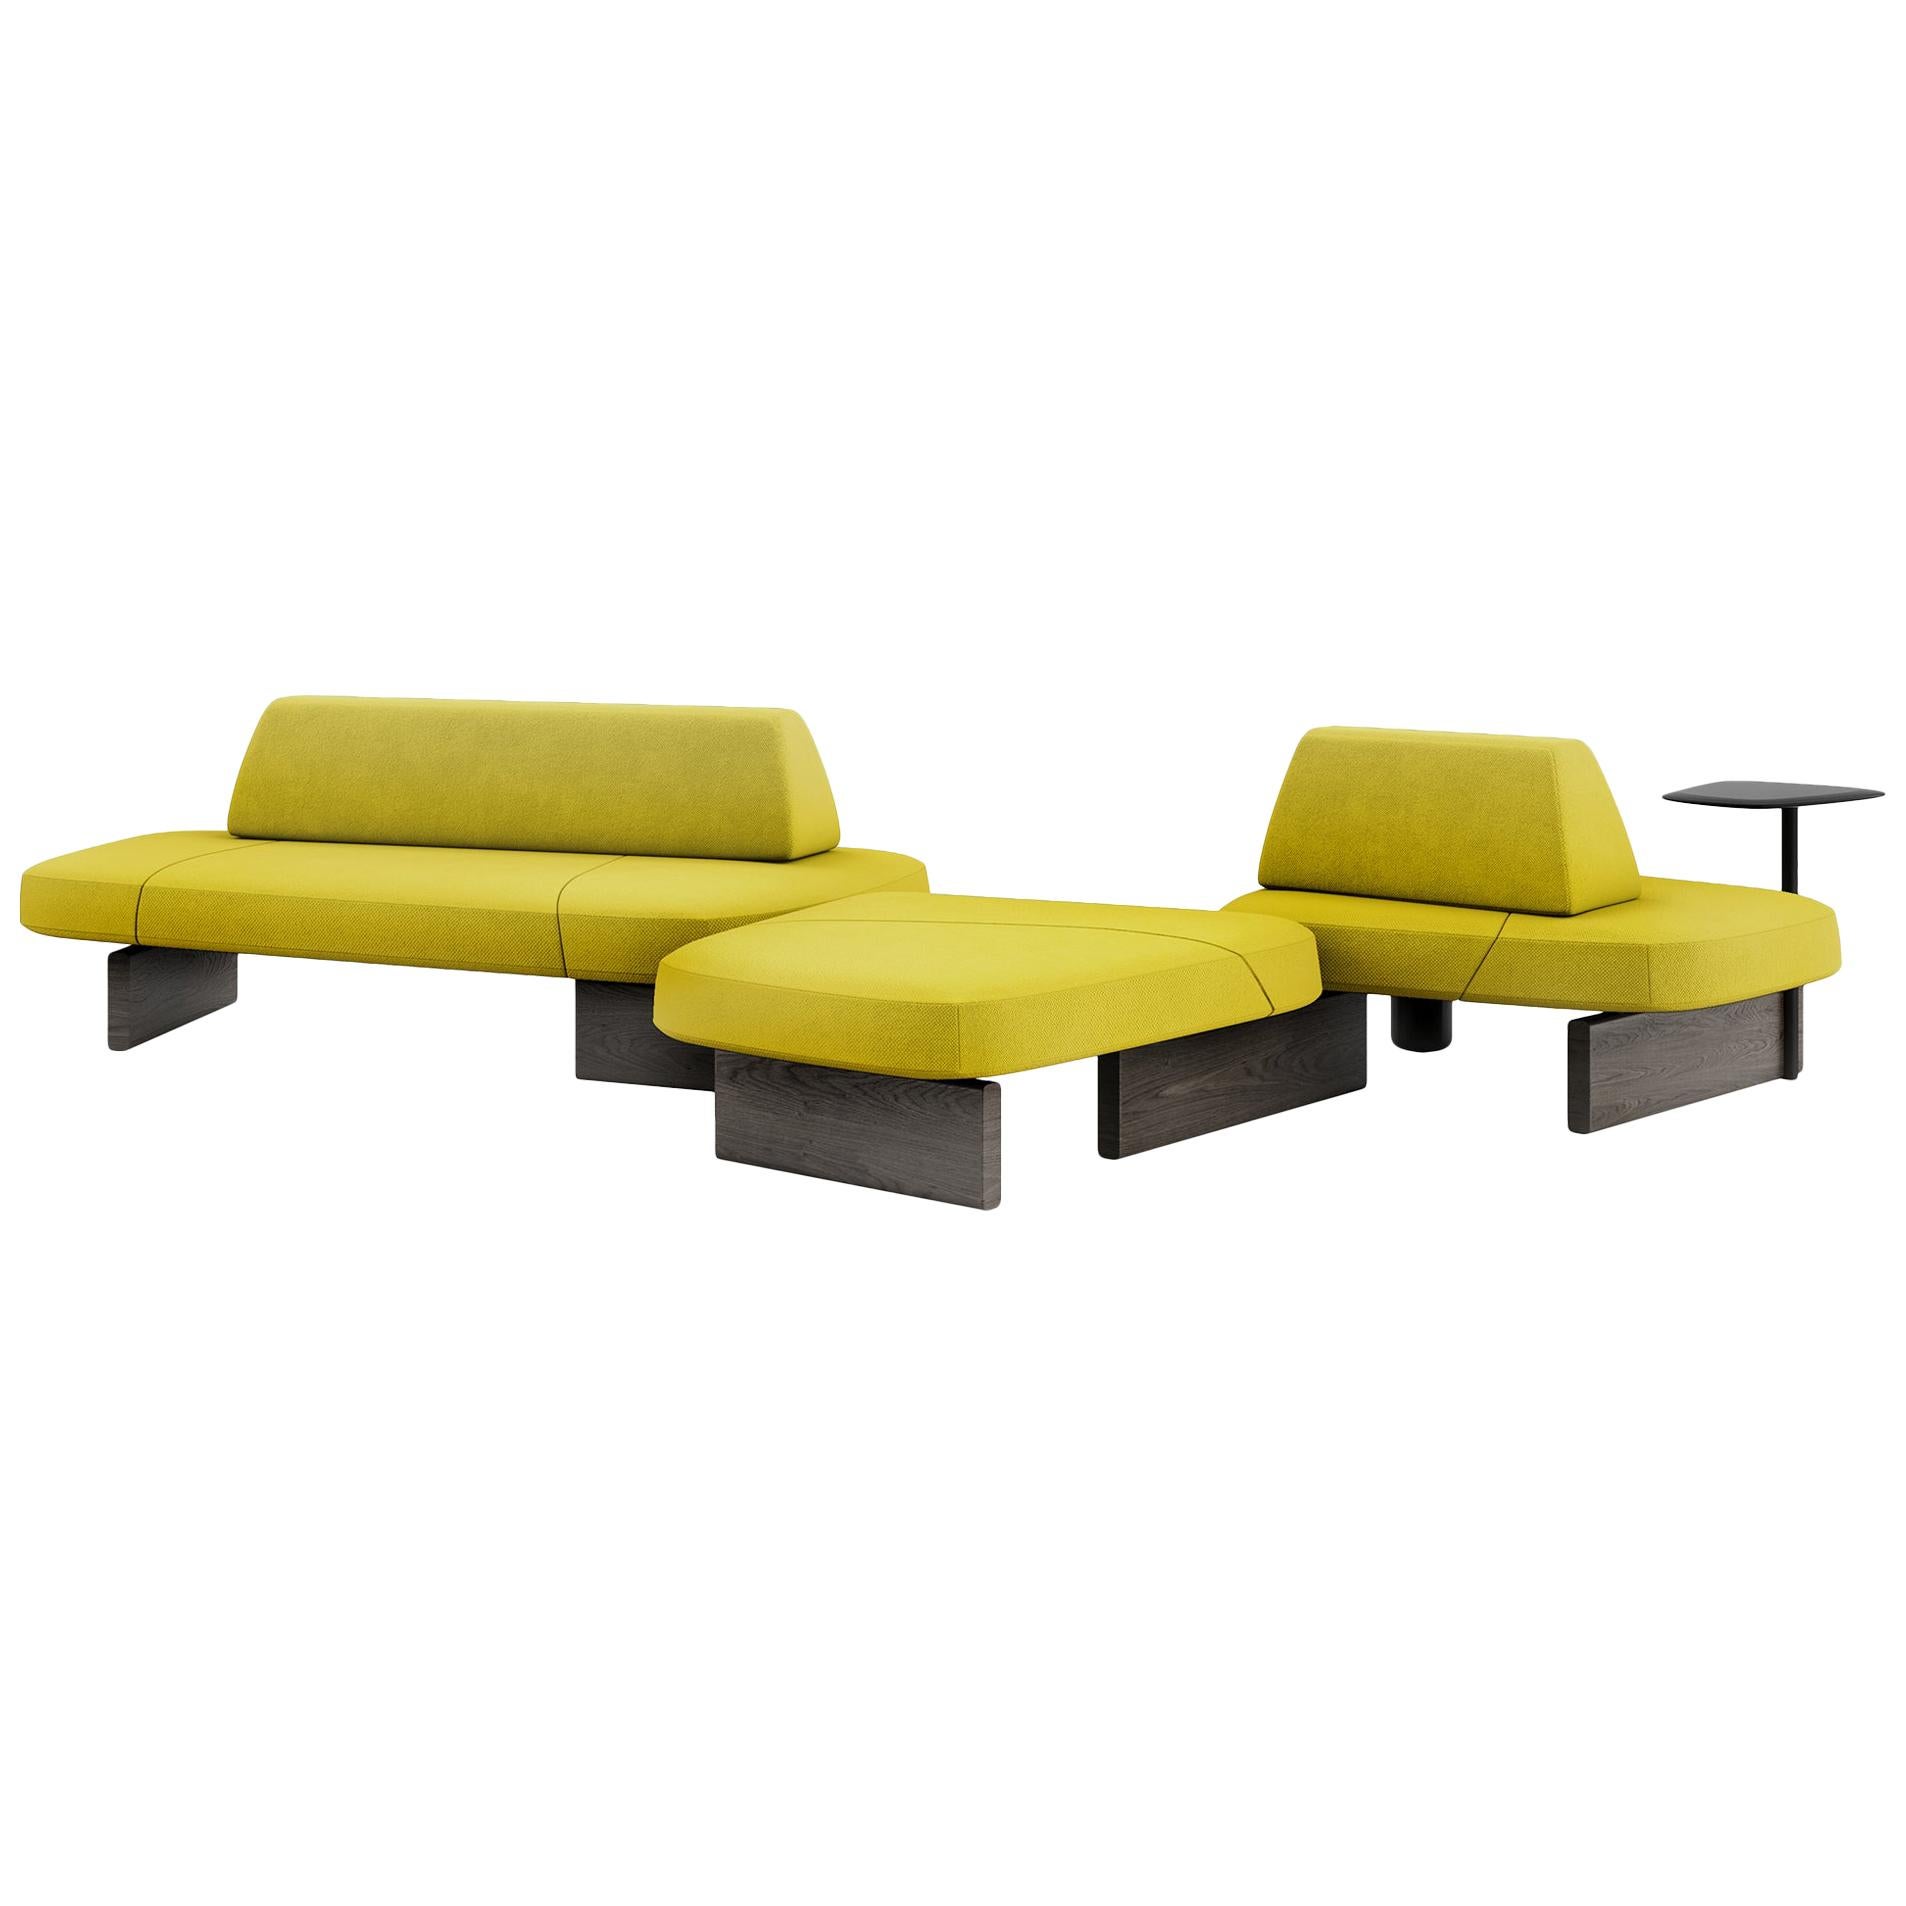 Tacchini Ischia Modular Sofa System in Yellow Bryony Fabric by Pearson Lloyd